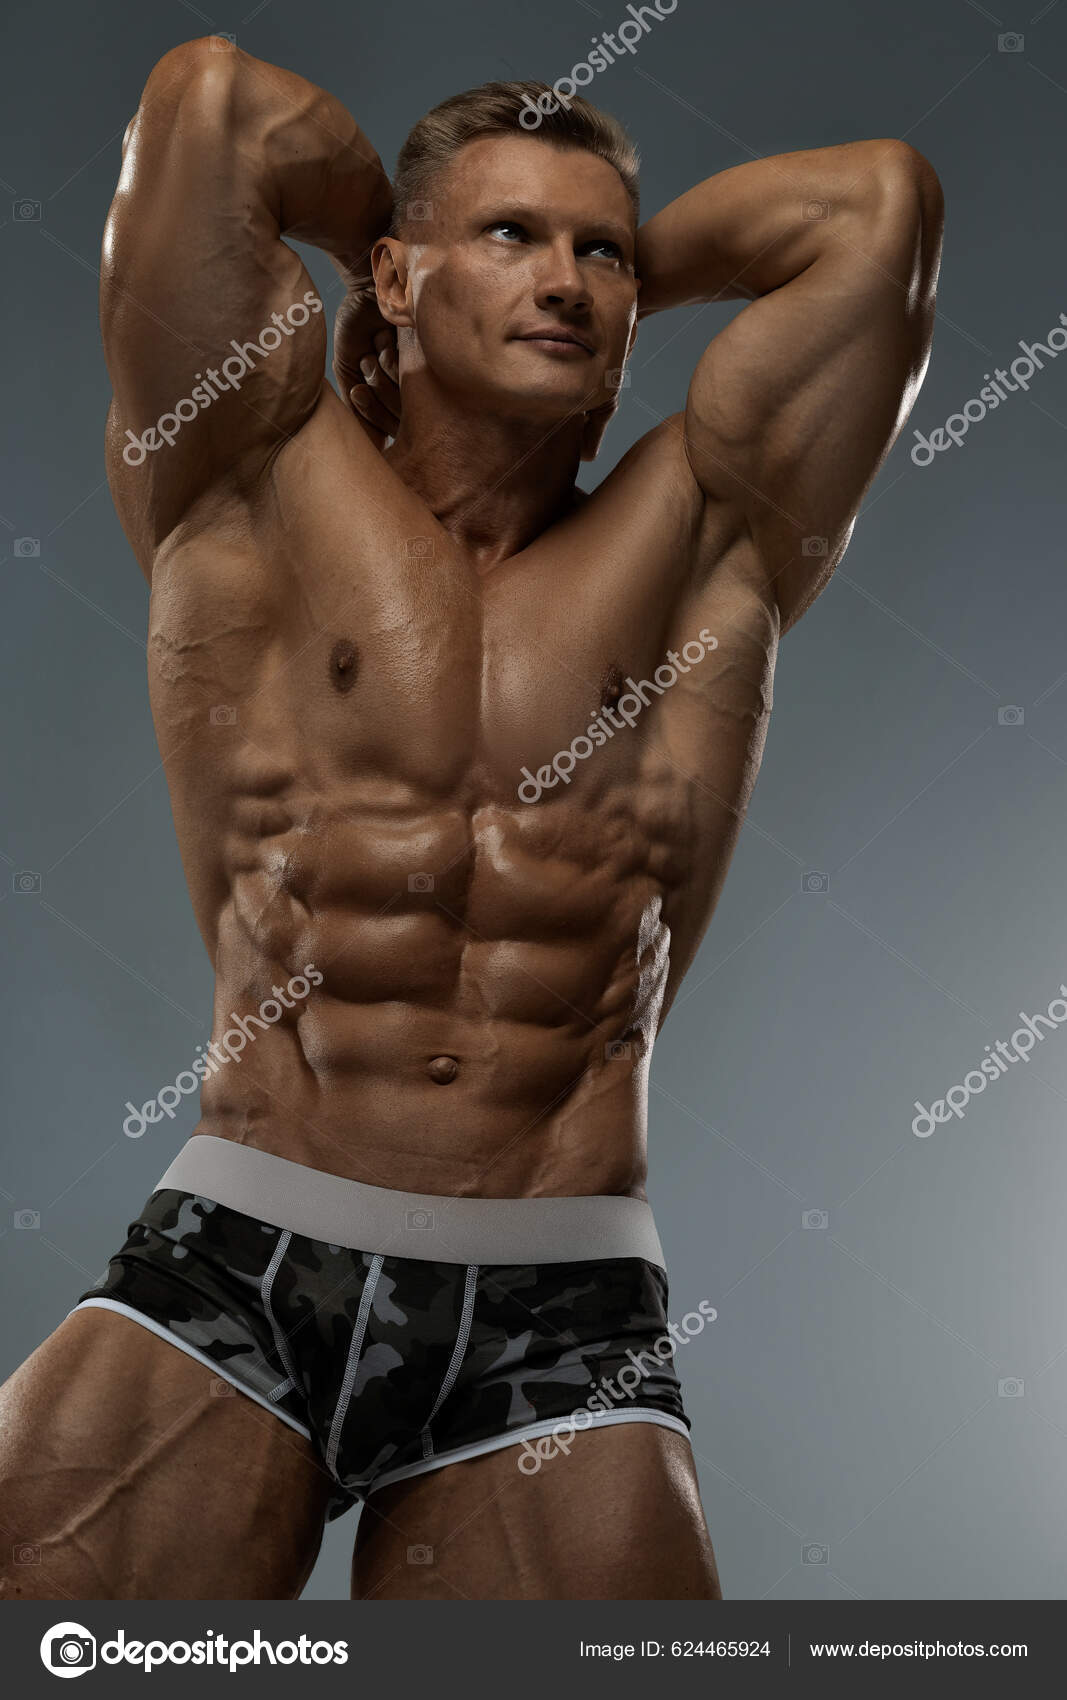 Bodybuilding Poses | Gym Photoshoot Poses | Roaxture | Photoshoot poses,  Gym photoshoot, Bodybuilding